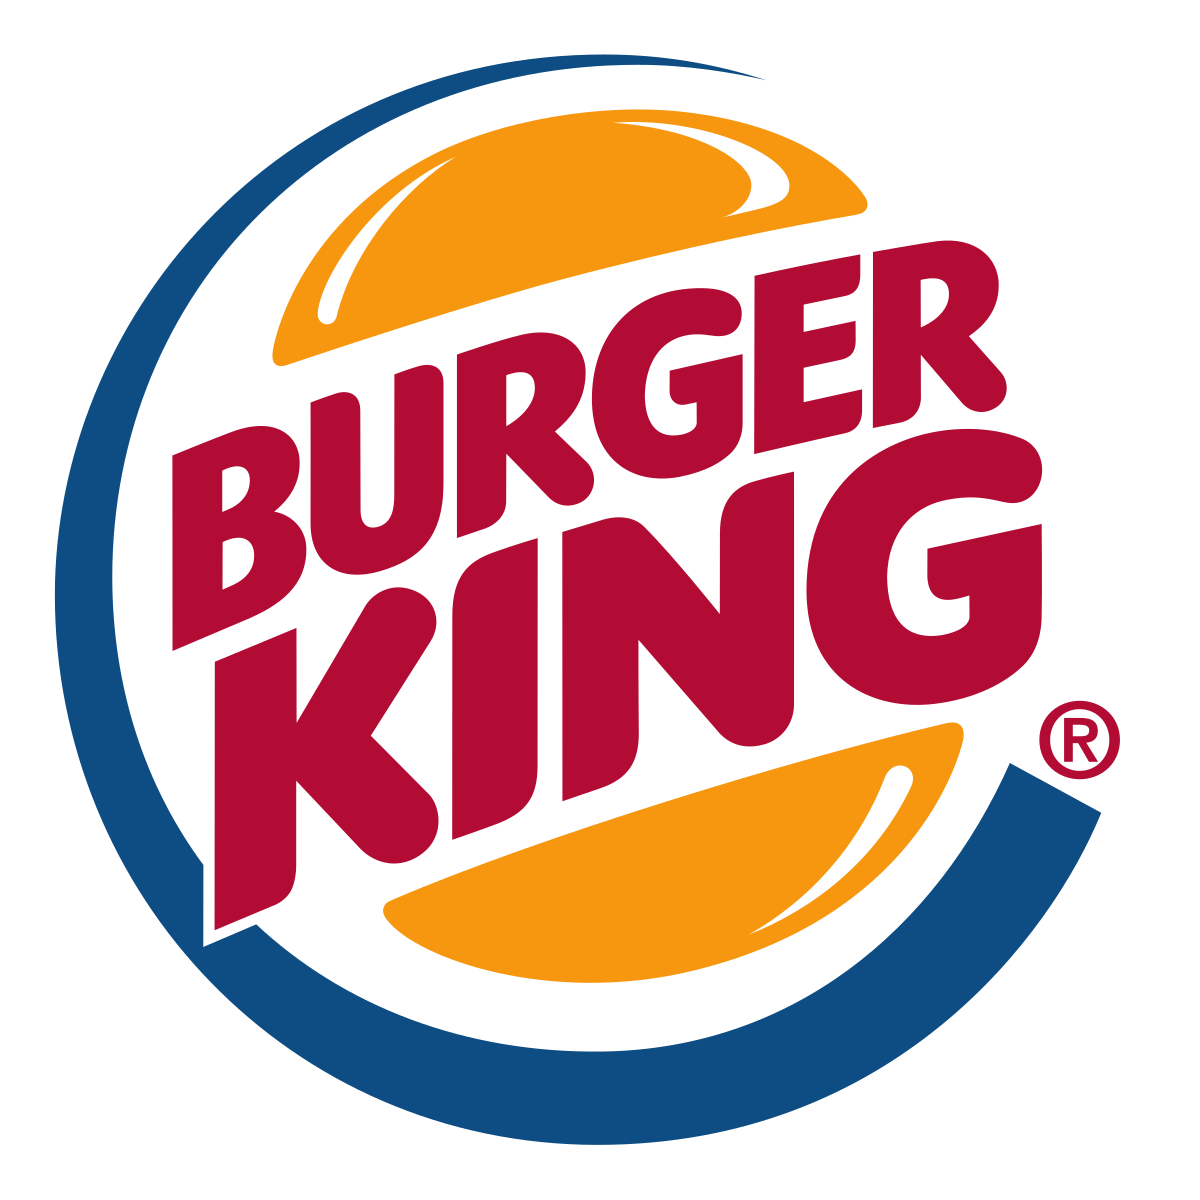 Logo_Burger_King.svg